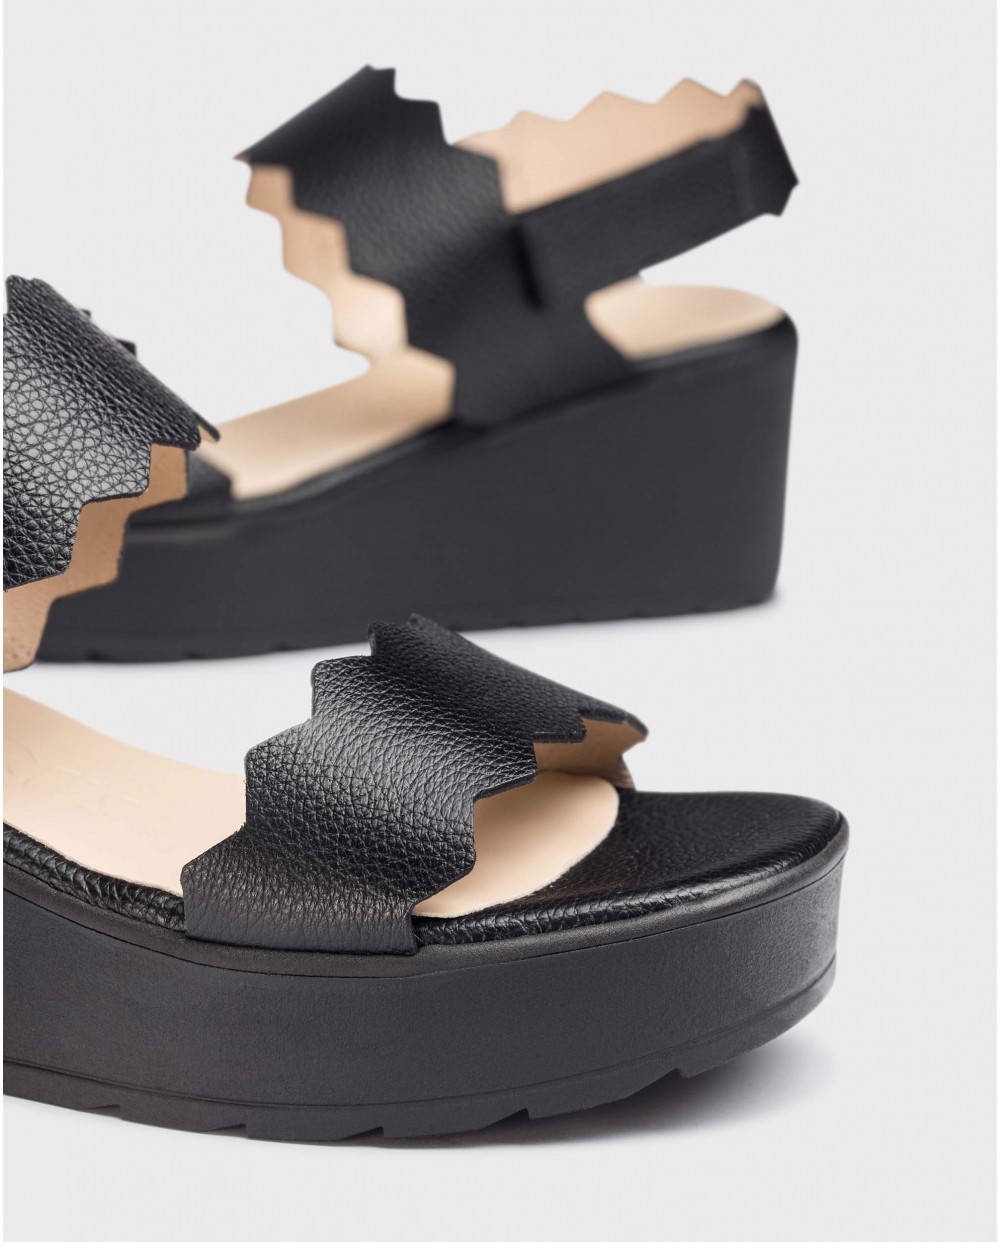 Wonders-Women shoes-Black PÚRPURA Sandals